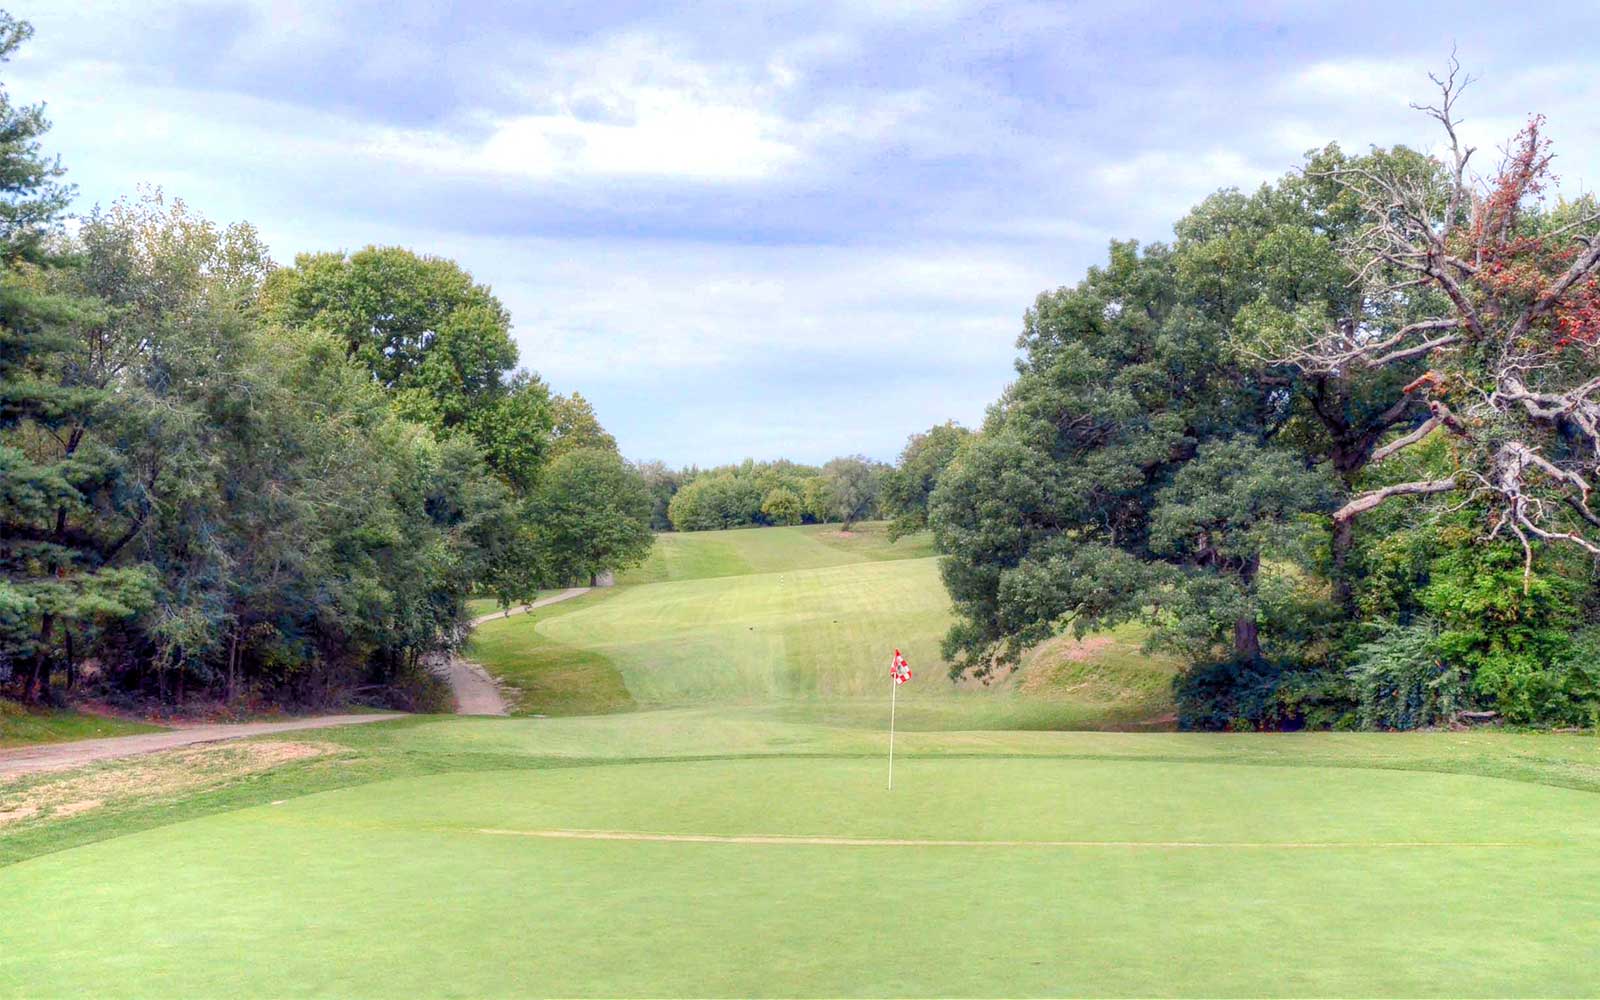 Normandie Golf Club | Best Golf Courses in St. Louis, Missouri | Reviews of Missouri Golf Courses